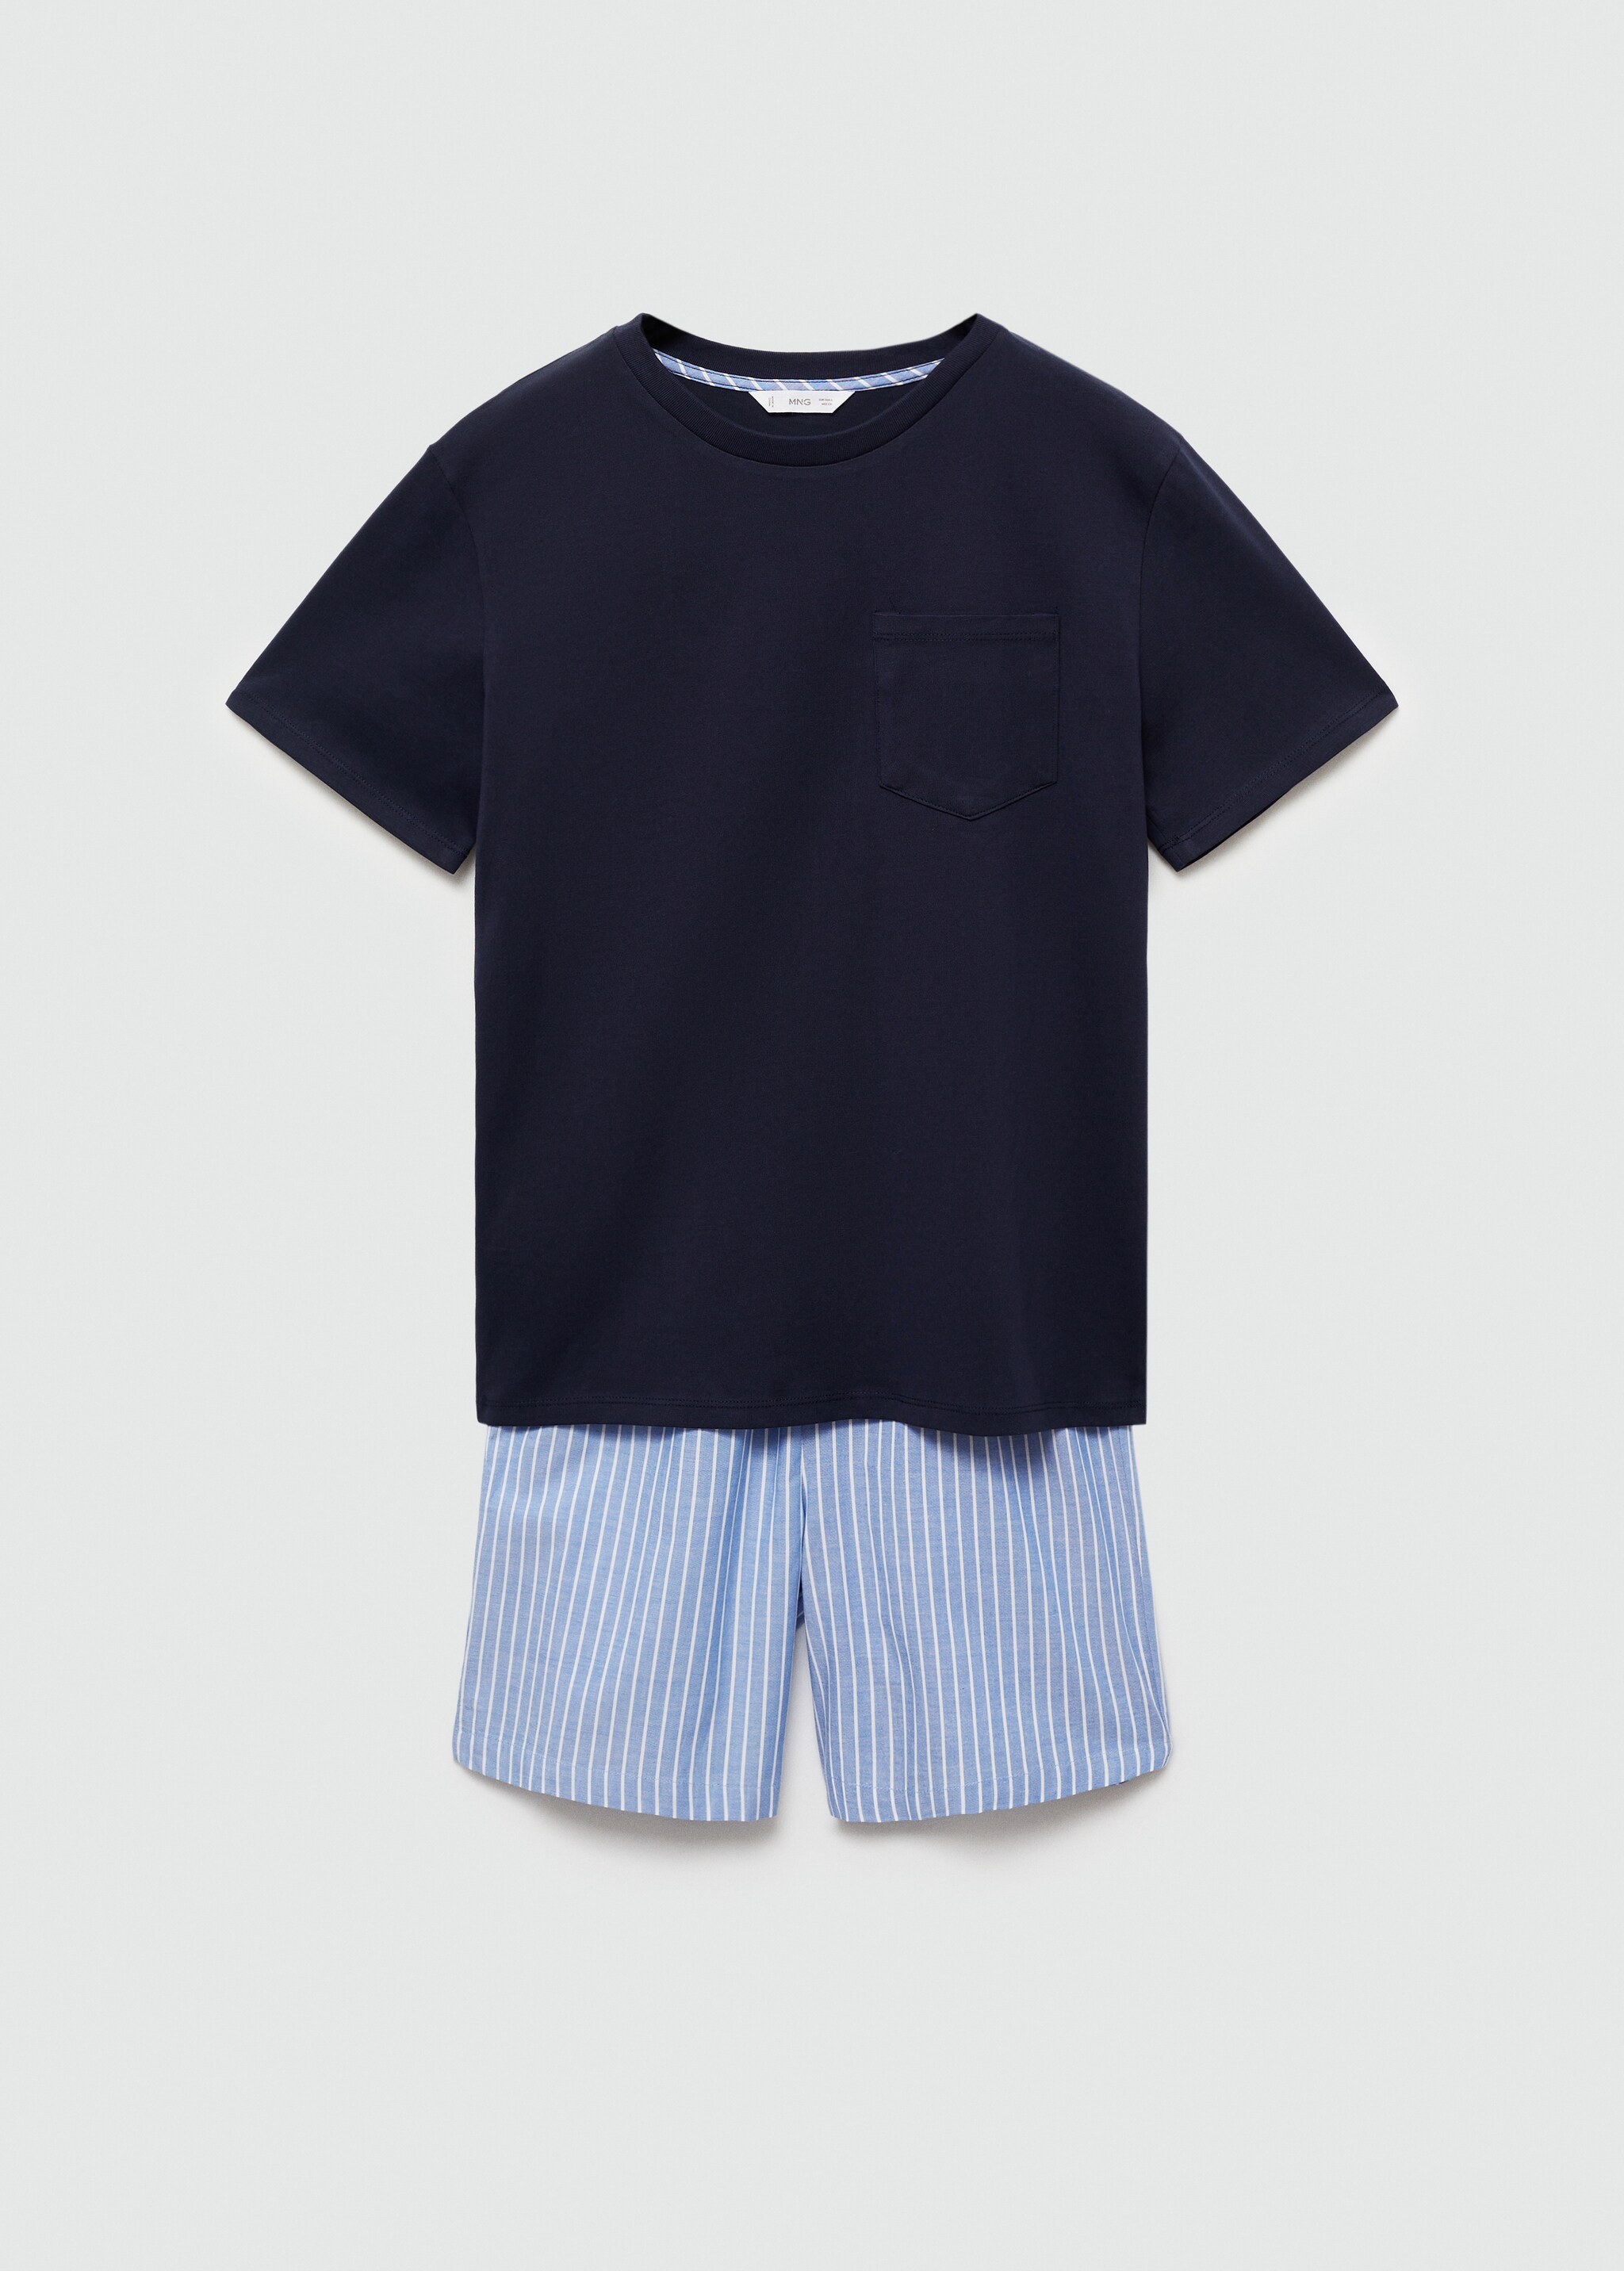 Pijama corto algodón rayas - Artículo sin modelo